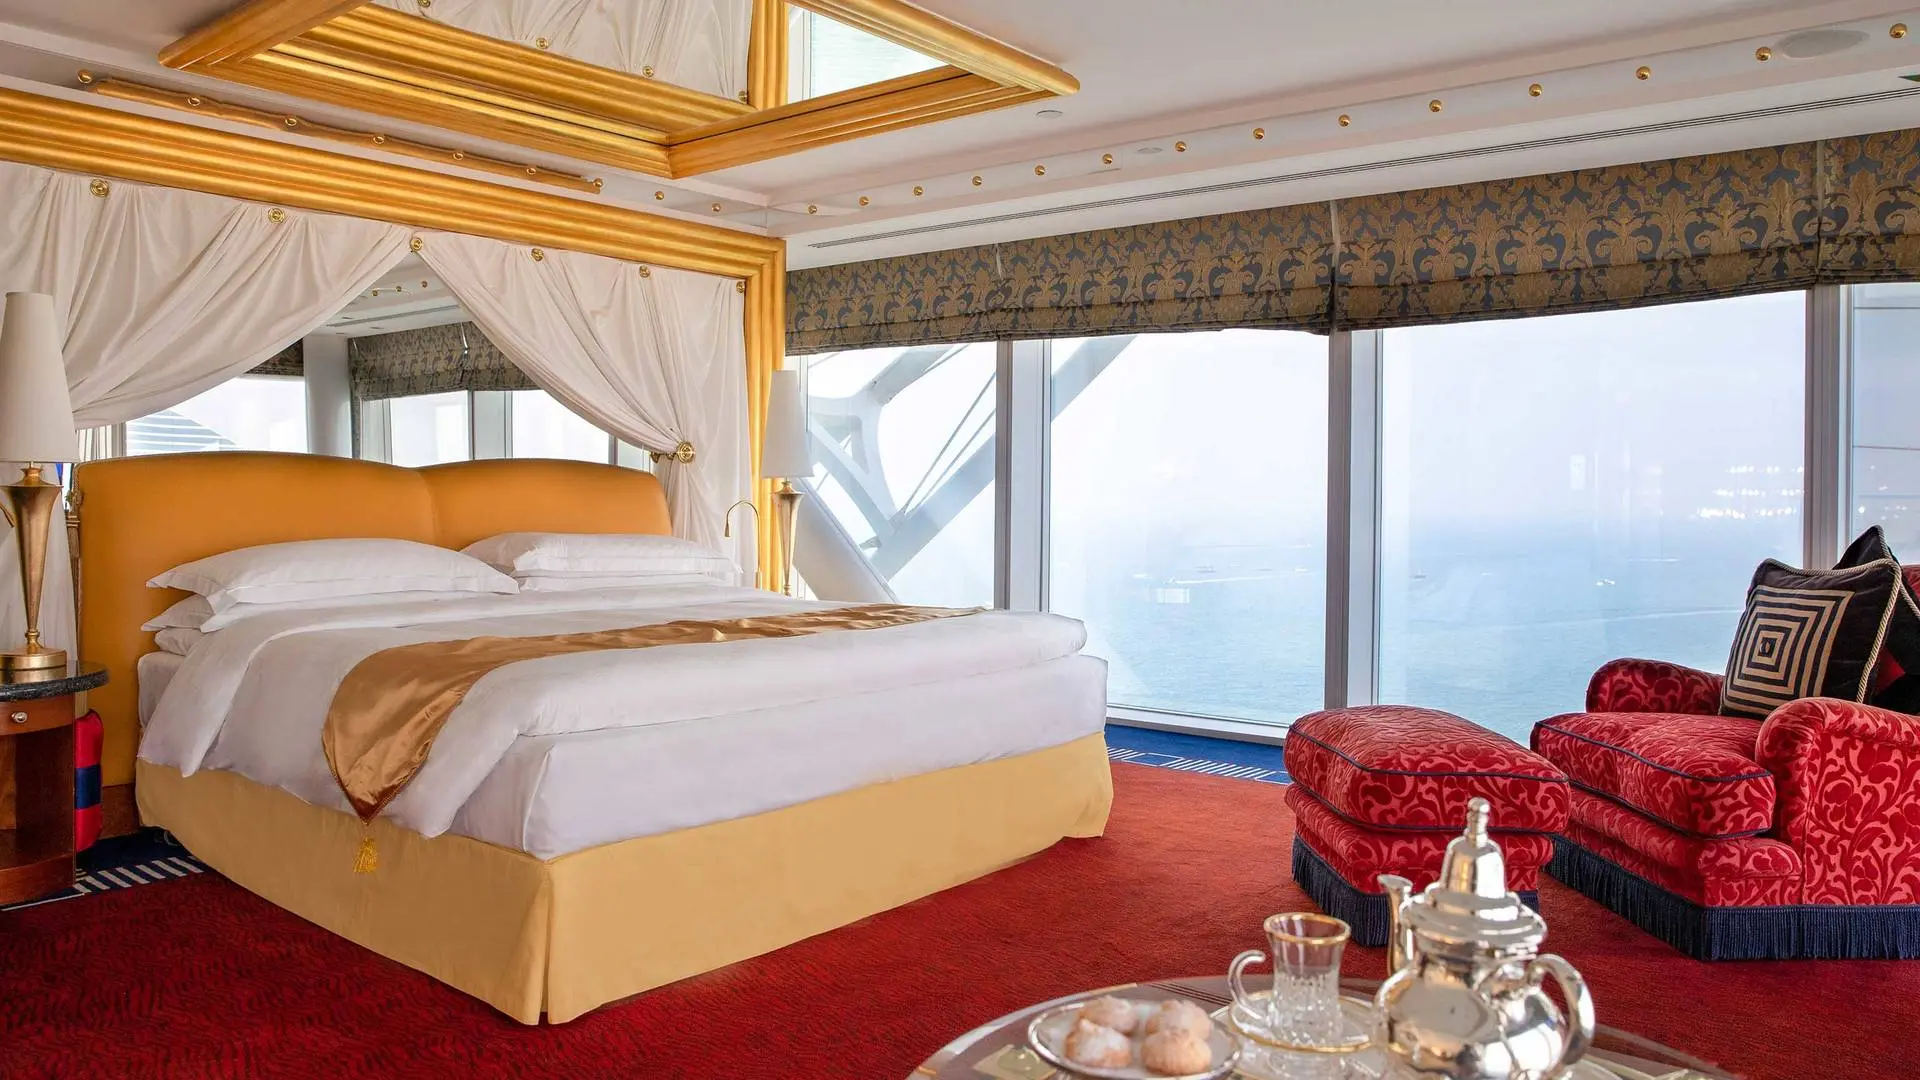 Hotel review Accommodation' - Burj Al Arab Jumeirah - 2